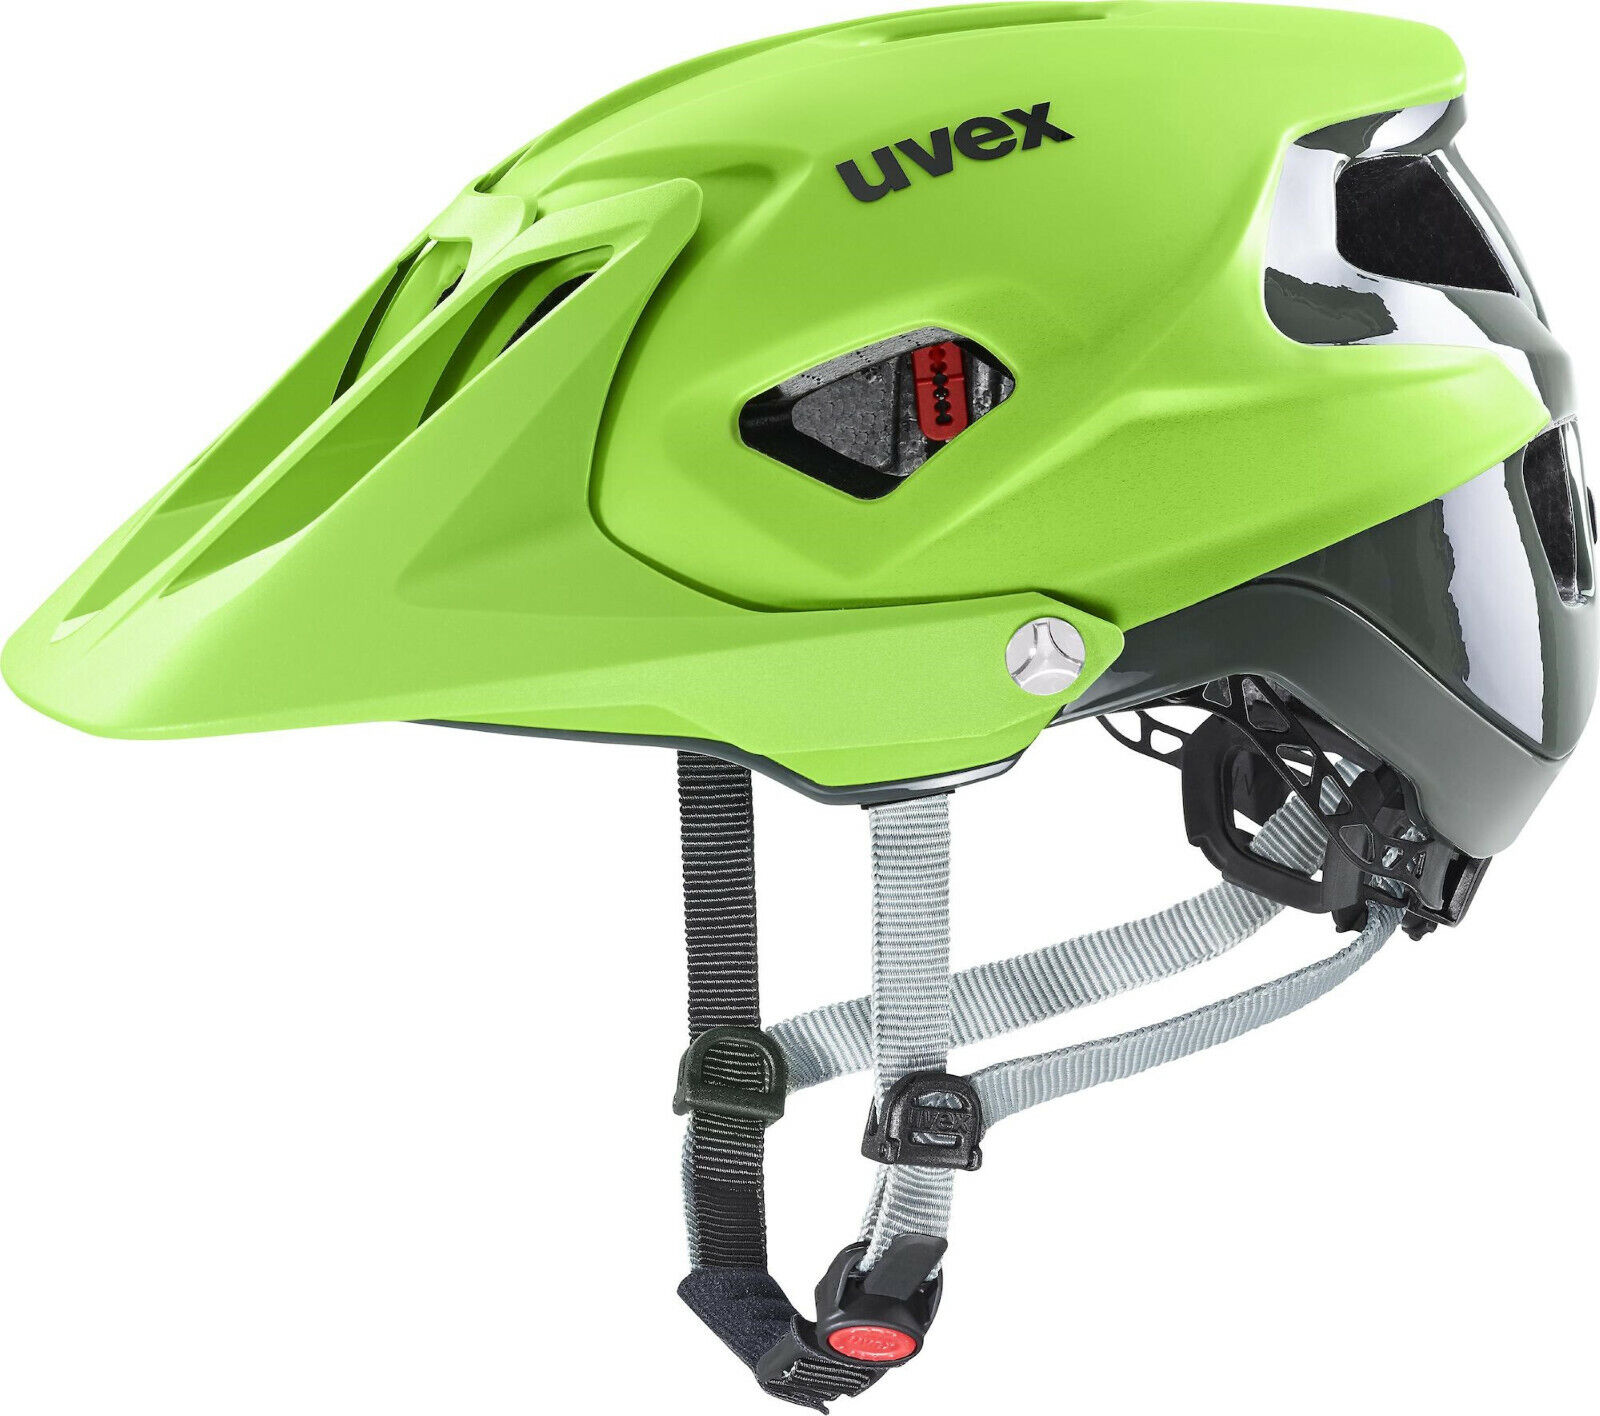 Disco Temerity Absorberend Uvex Quatro Integrale Lime Bike Helmet Safety Helmet | eBay